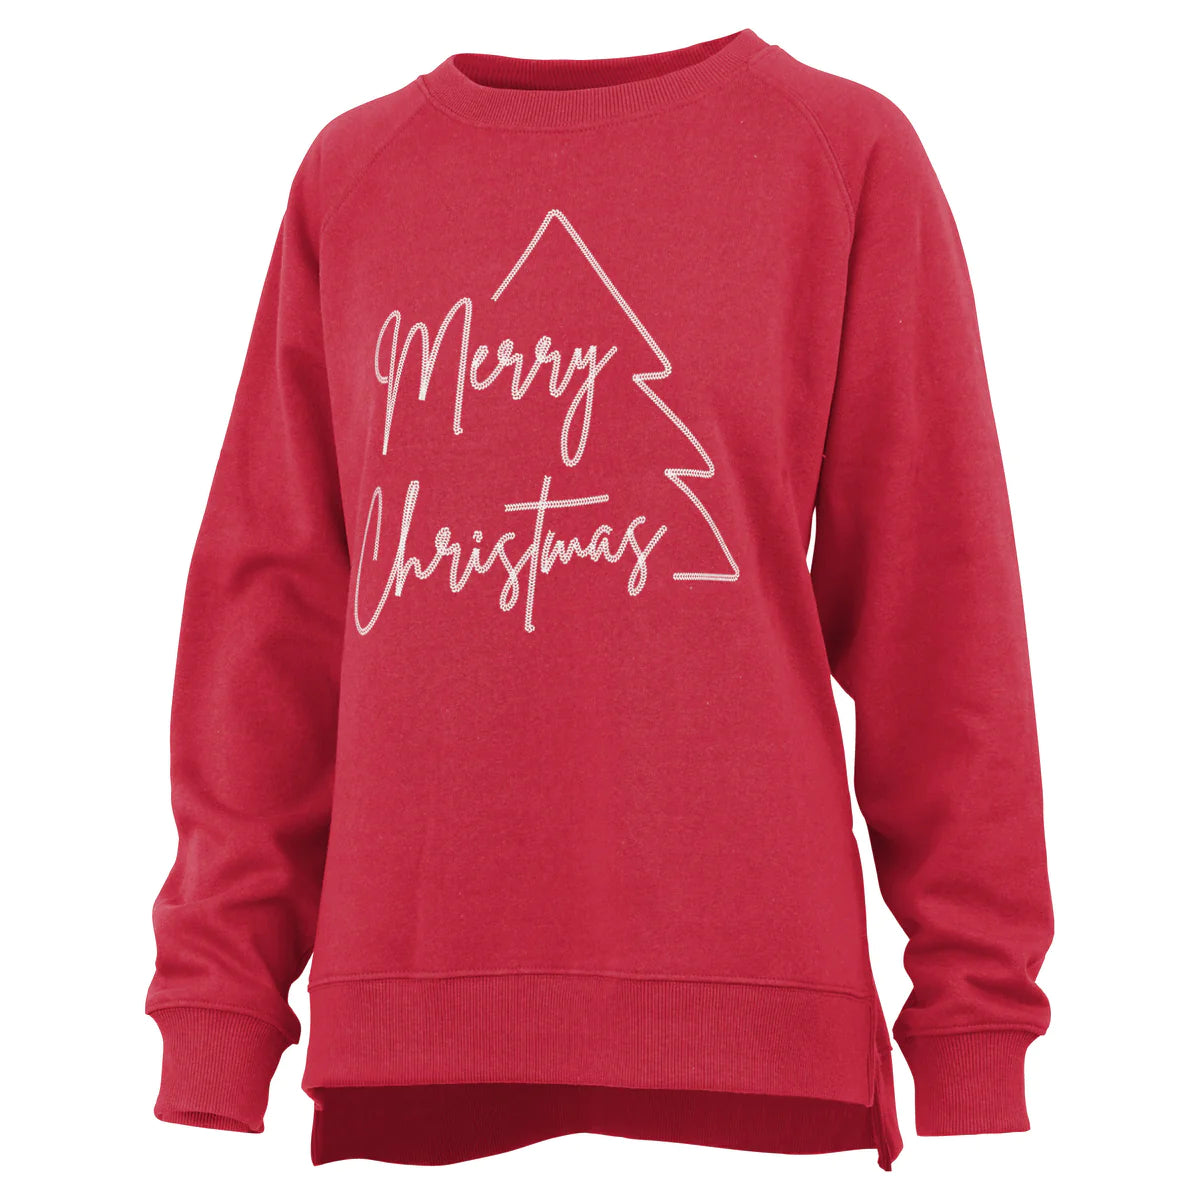 Merry Christmas Tree Chainstitch Sweatshirt at ooh la la! in Grapevine TX 76051